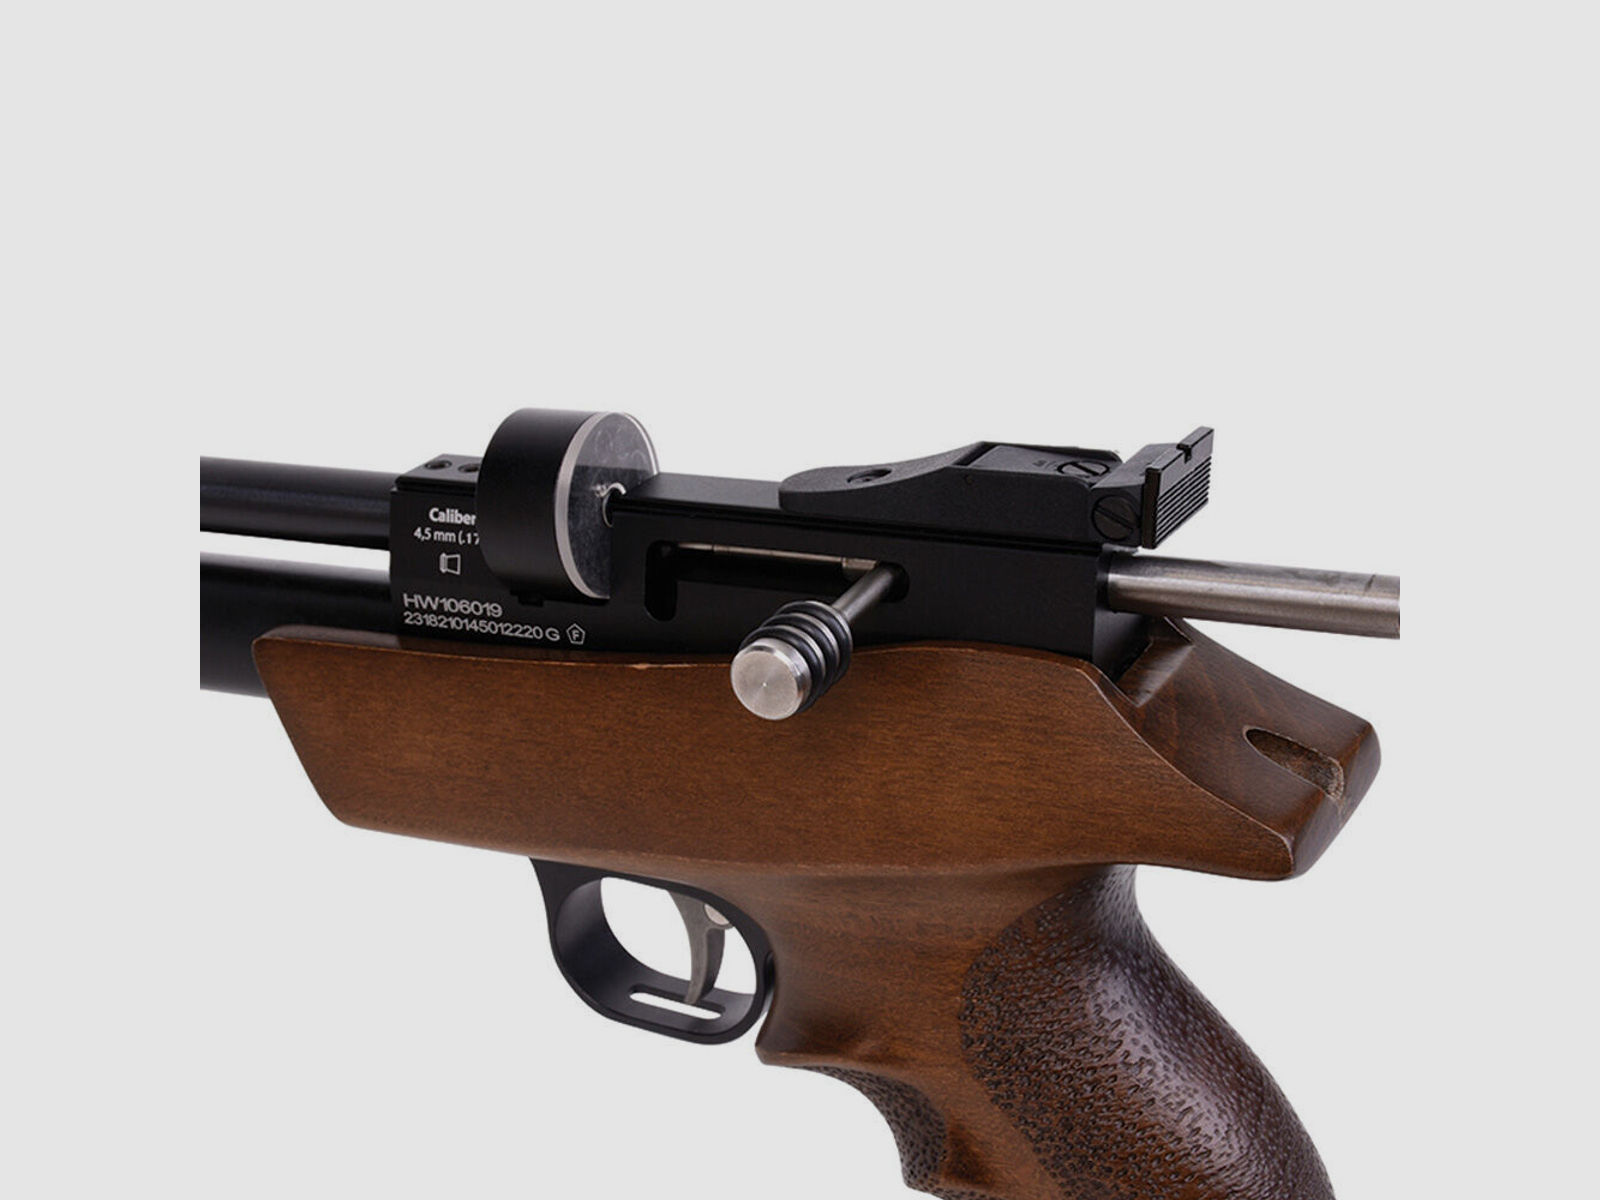 Diana Bandit Gen 2 Pressluftpistole 4,5mm Diabolos Kugelfang Set